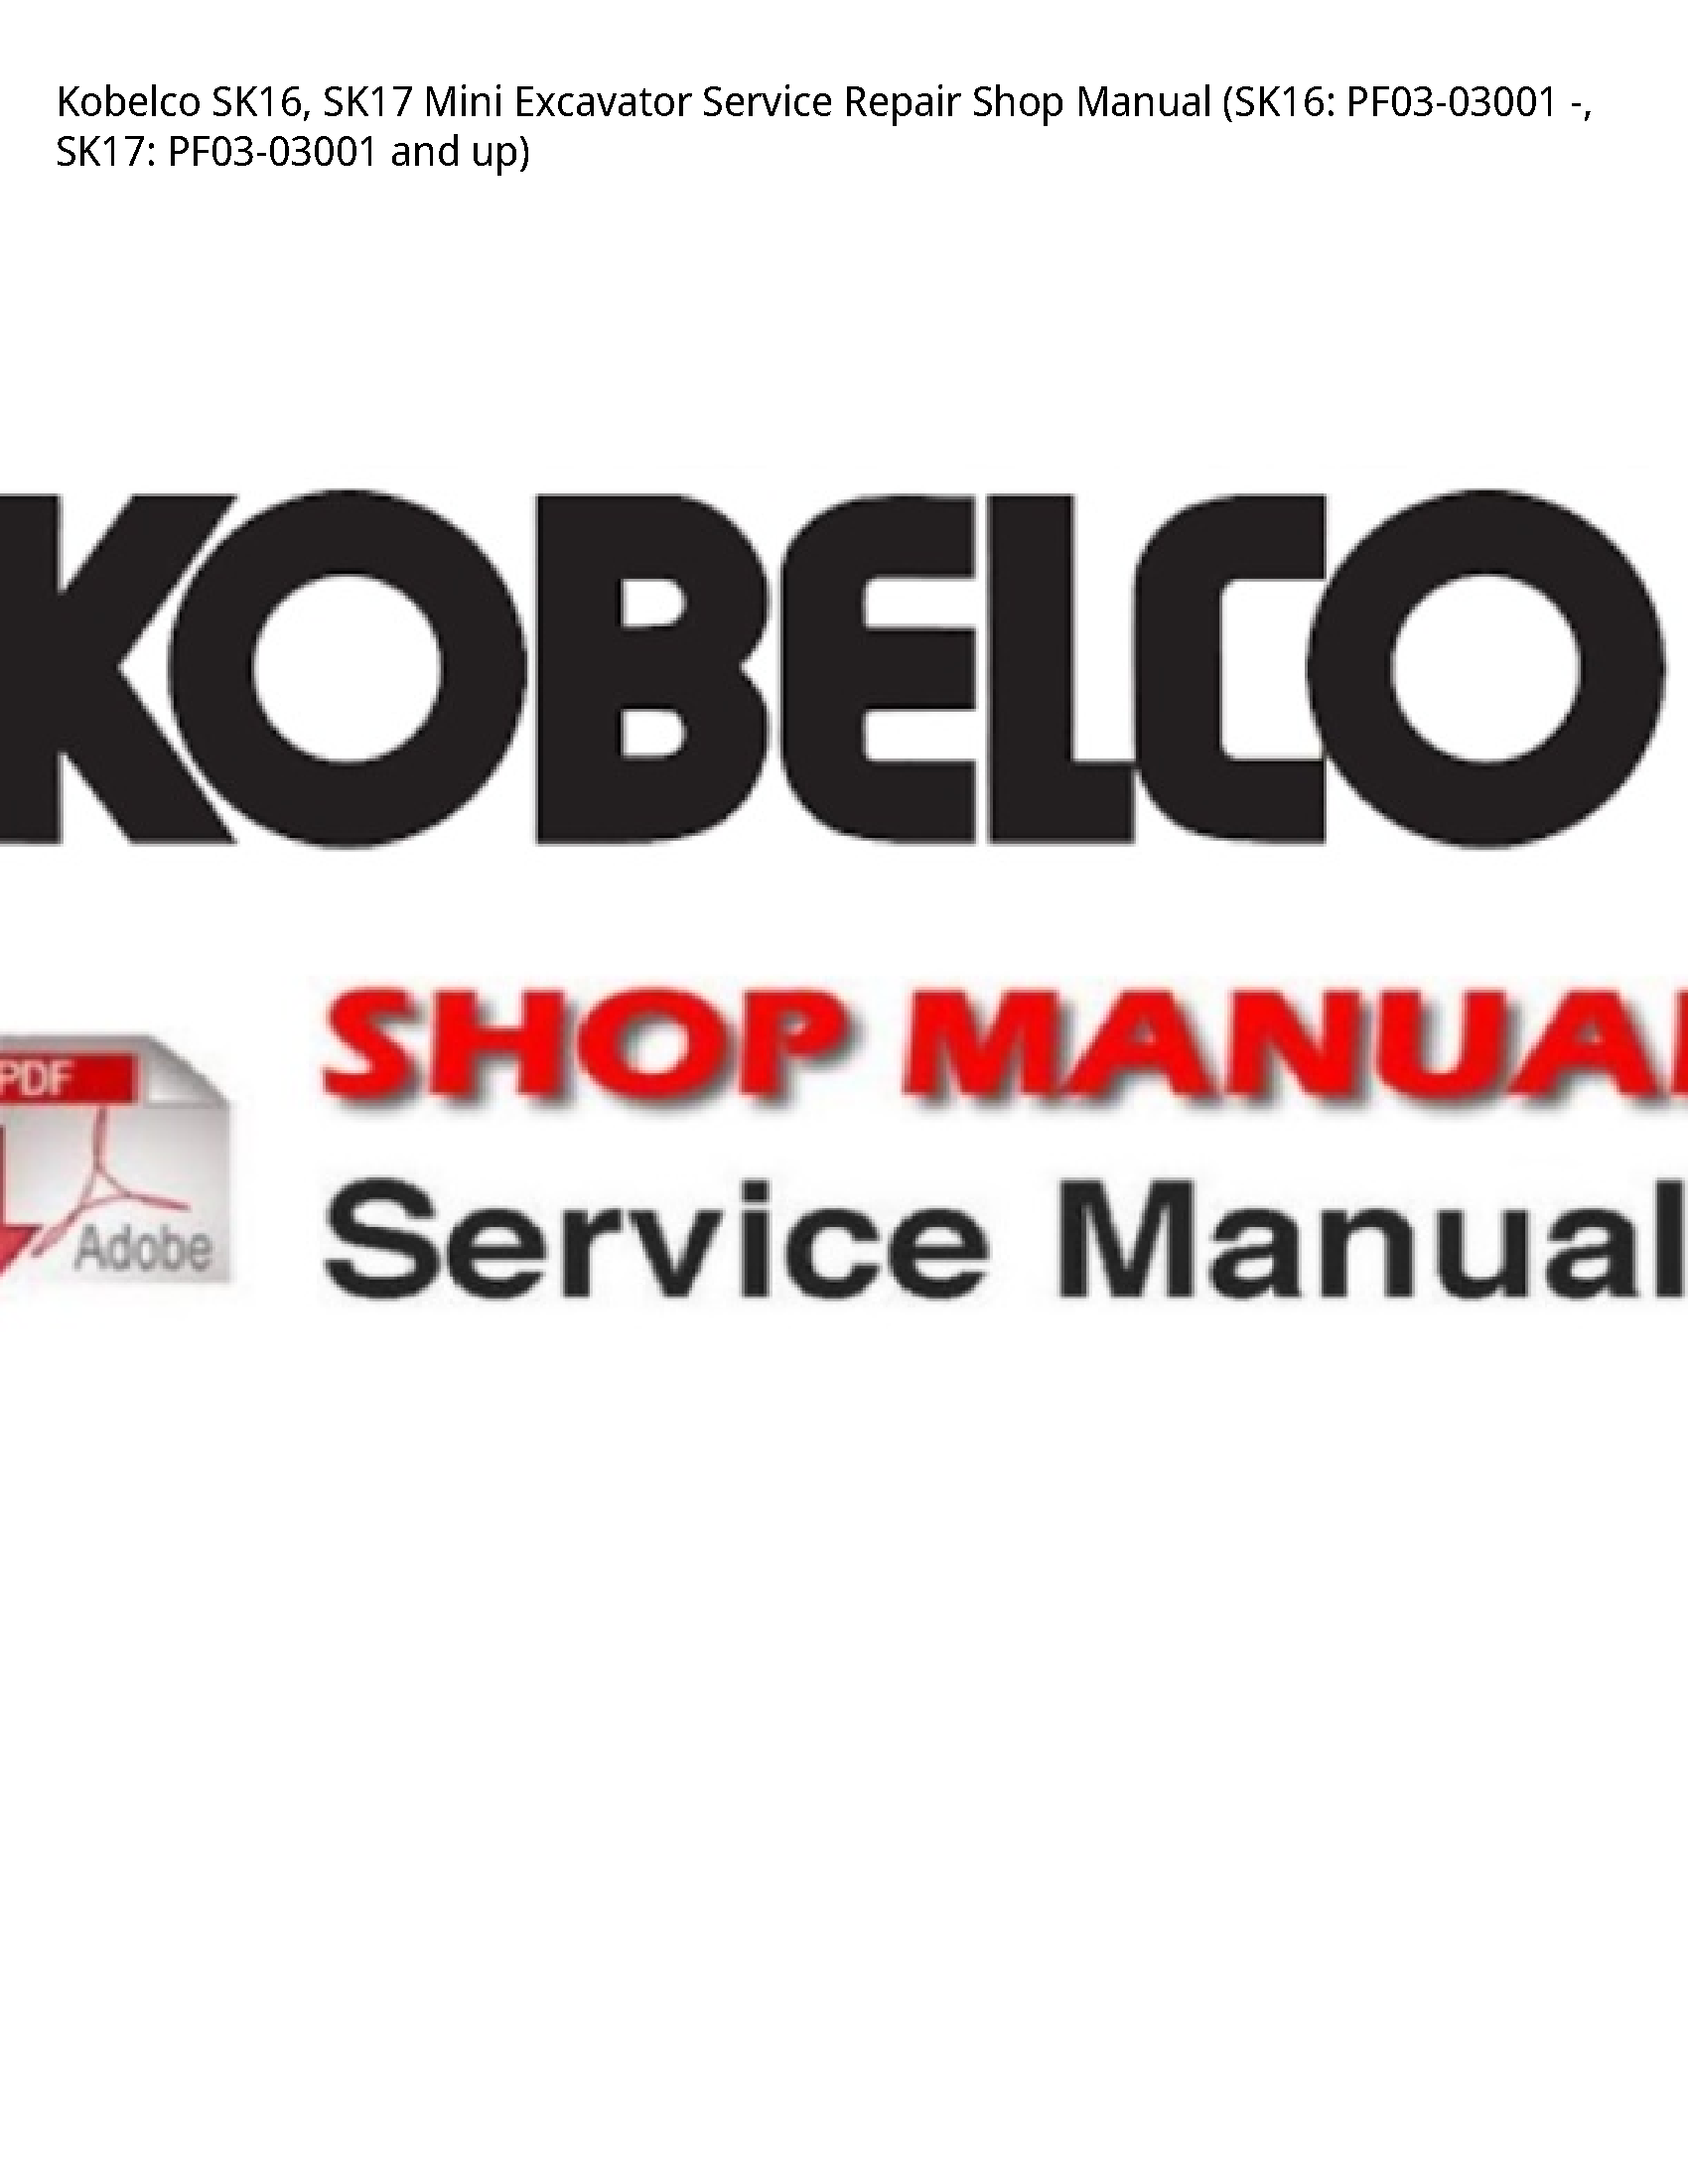 Kobelco SK16 Mini Excavator manual